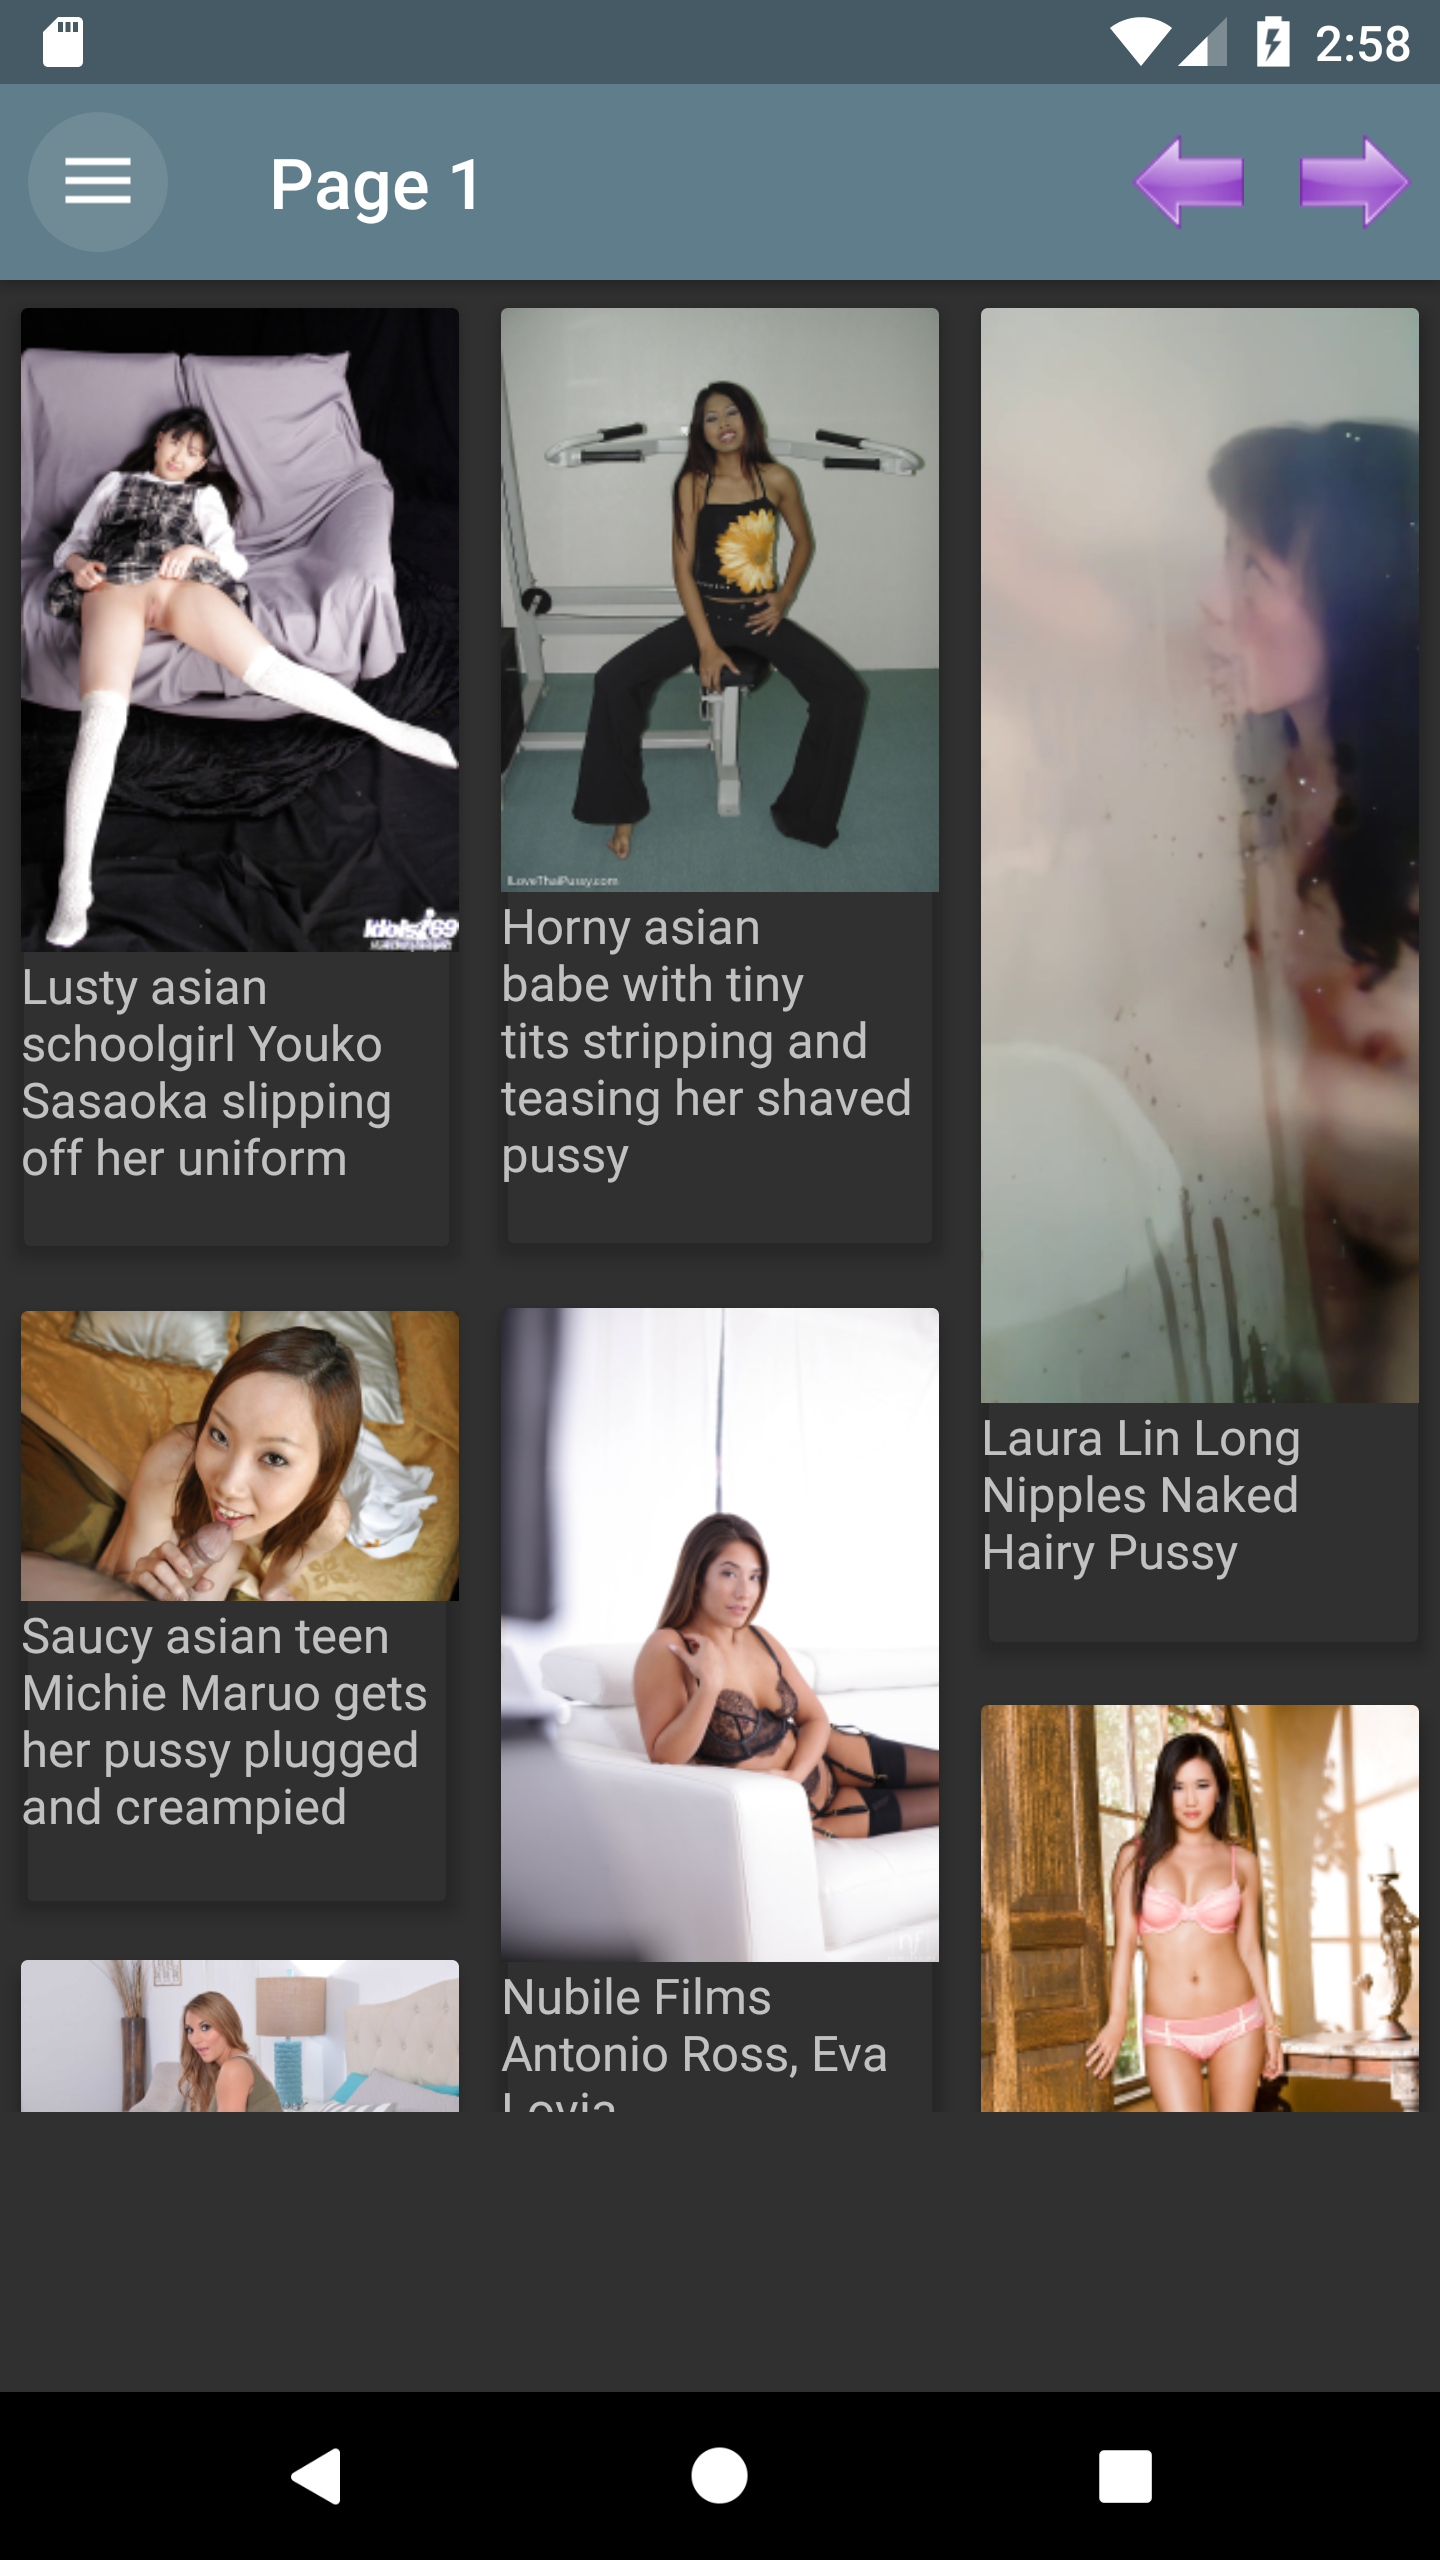 Asian pornstar,هنتاي,hot,صور,best,jagger,android,sexygalleries,porn,تطبيق,josie,pornstars,photo,hentai,apps,phone,app,sexy,futanari,video,galleries,pics